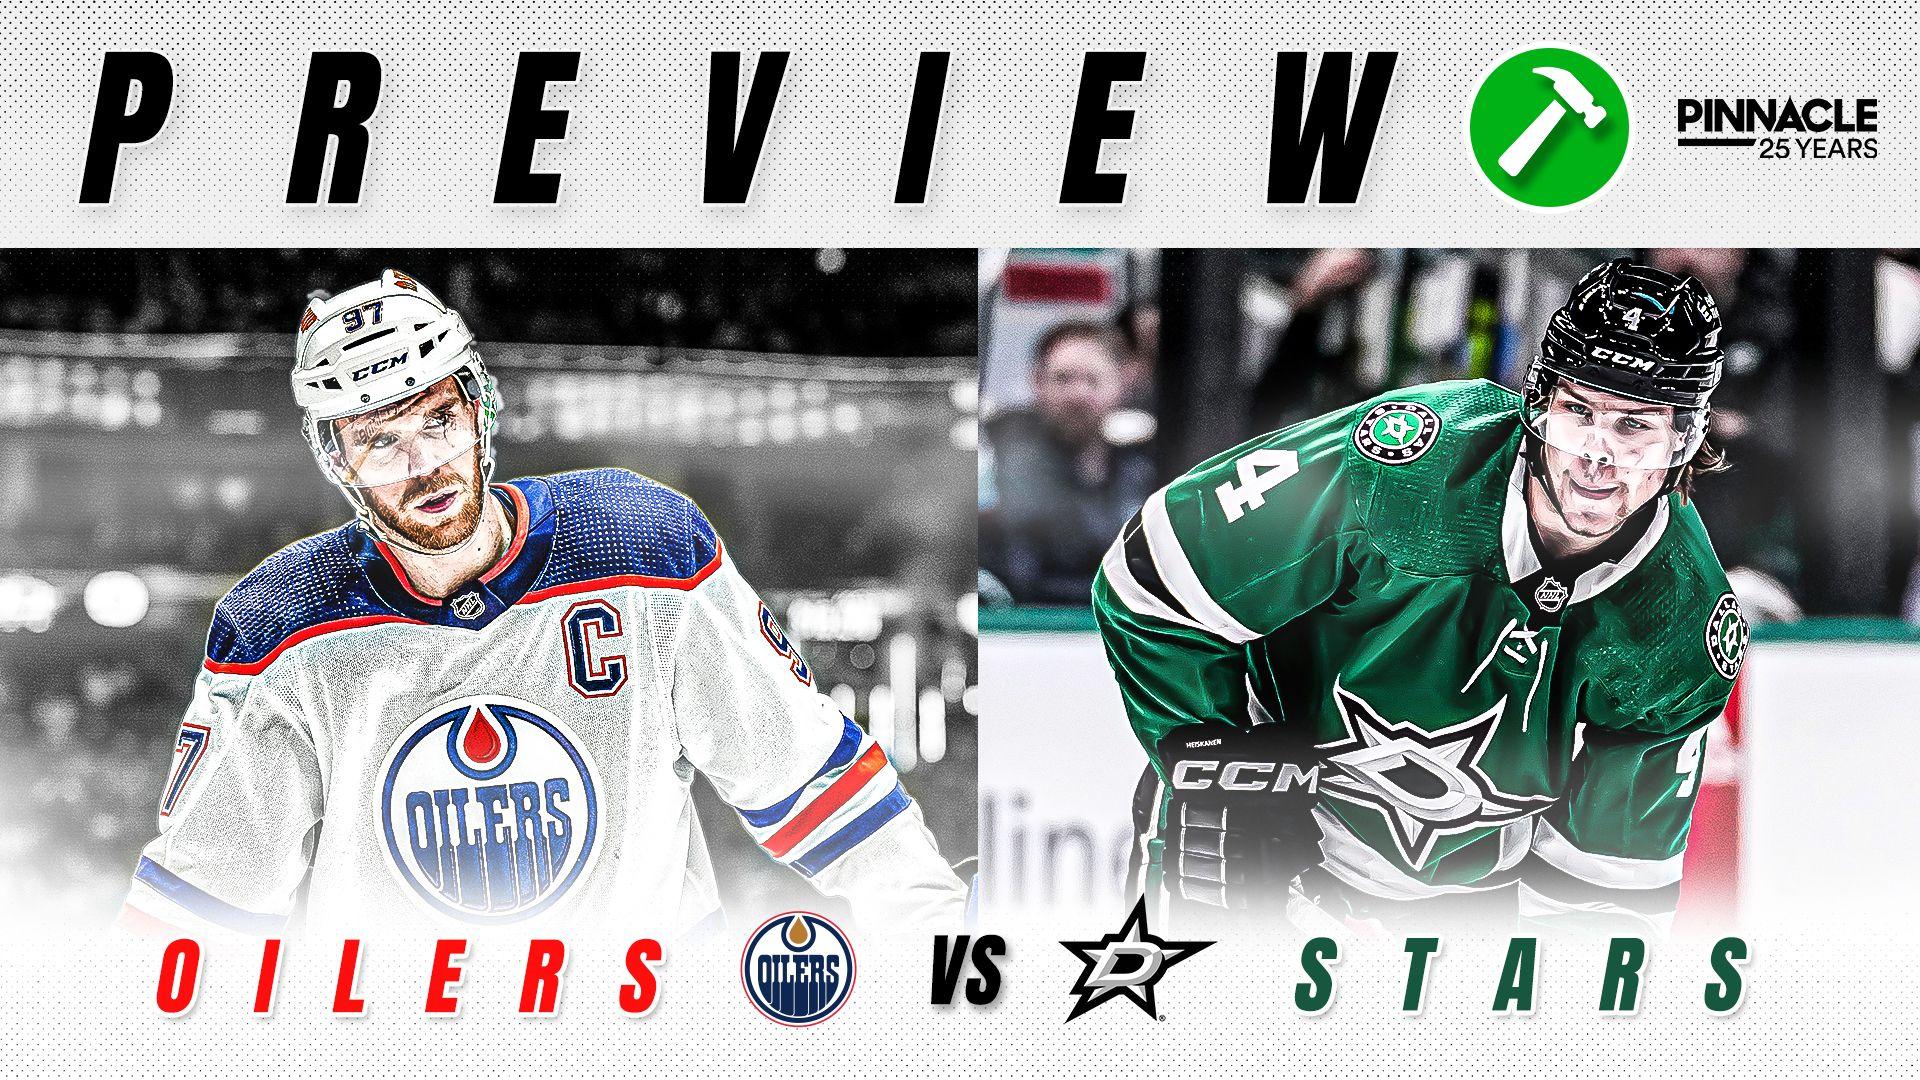 Oilers_Stars Preview Thumbnail.jpg